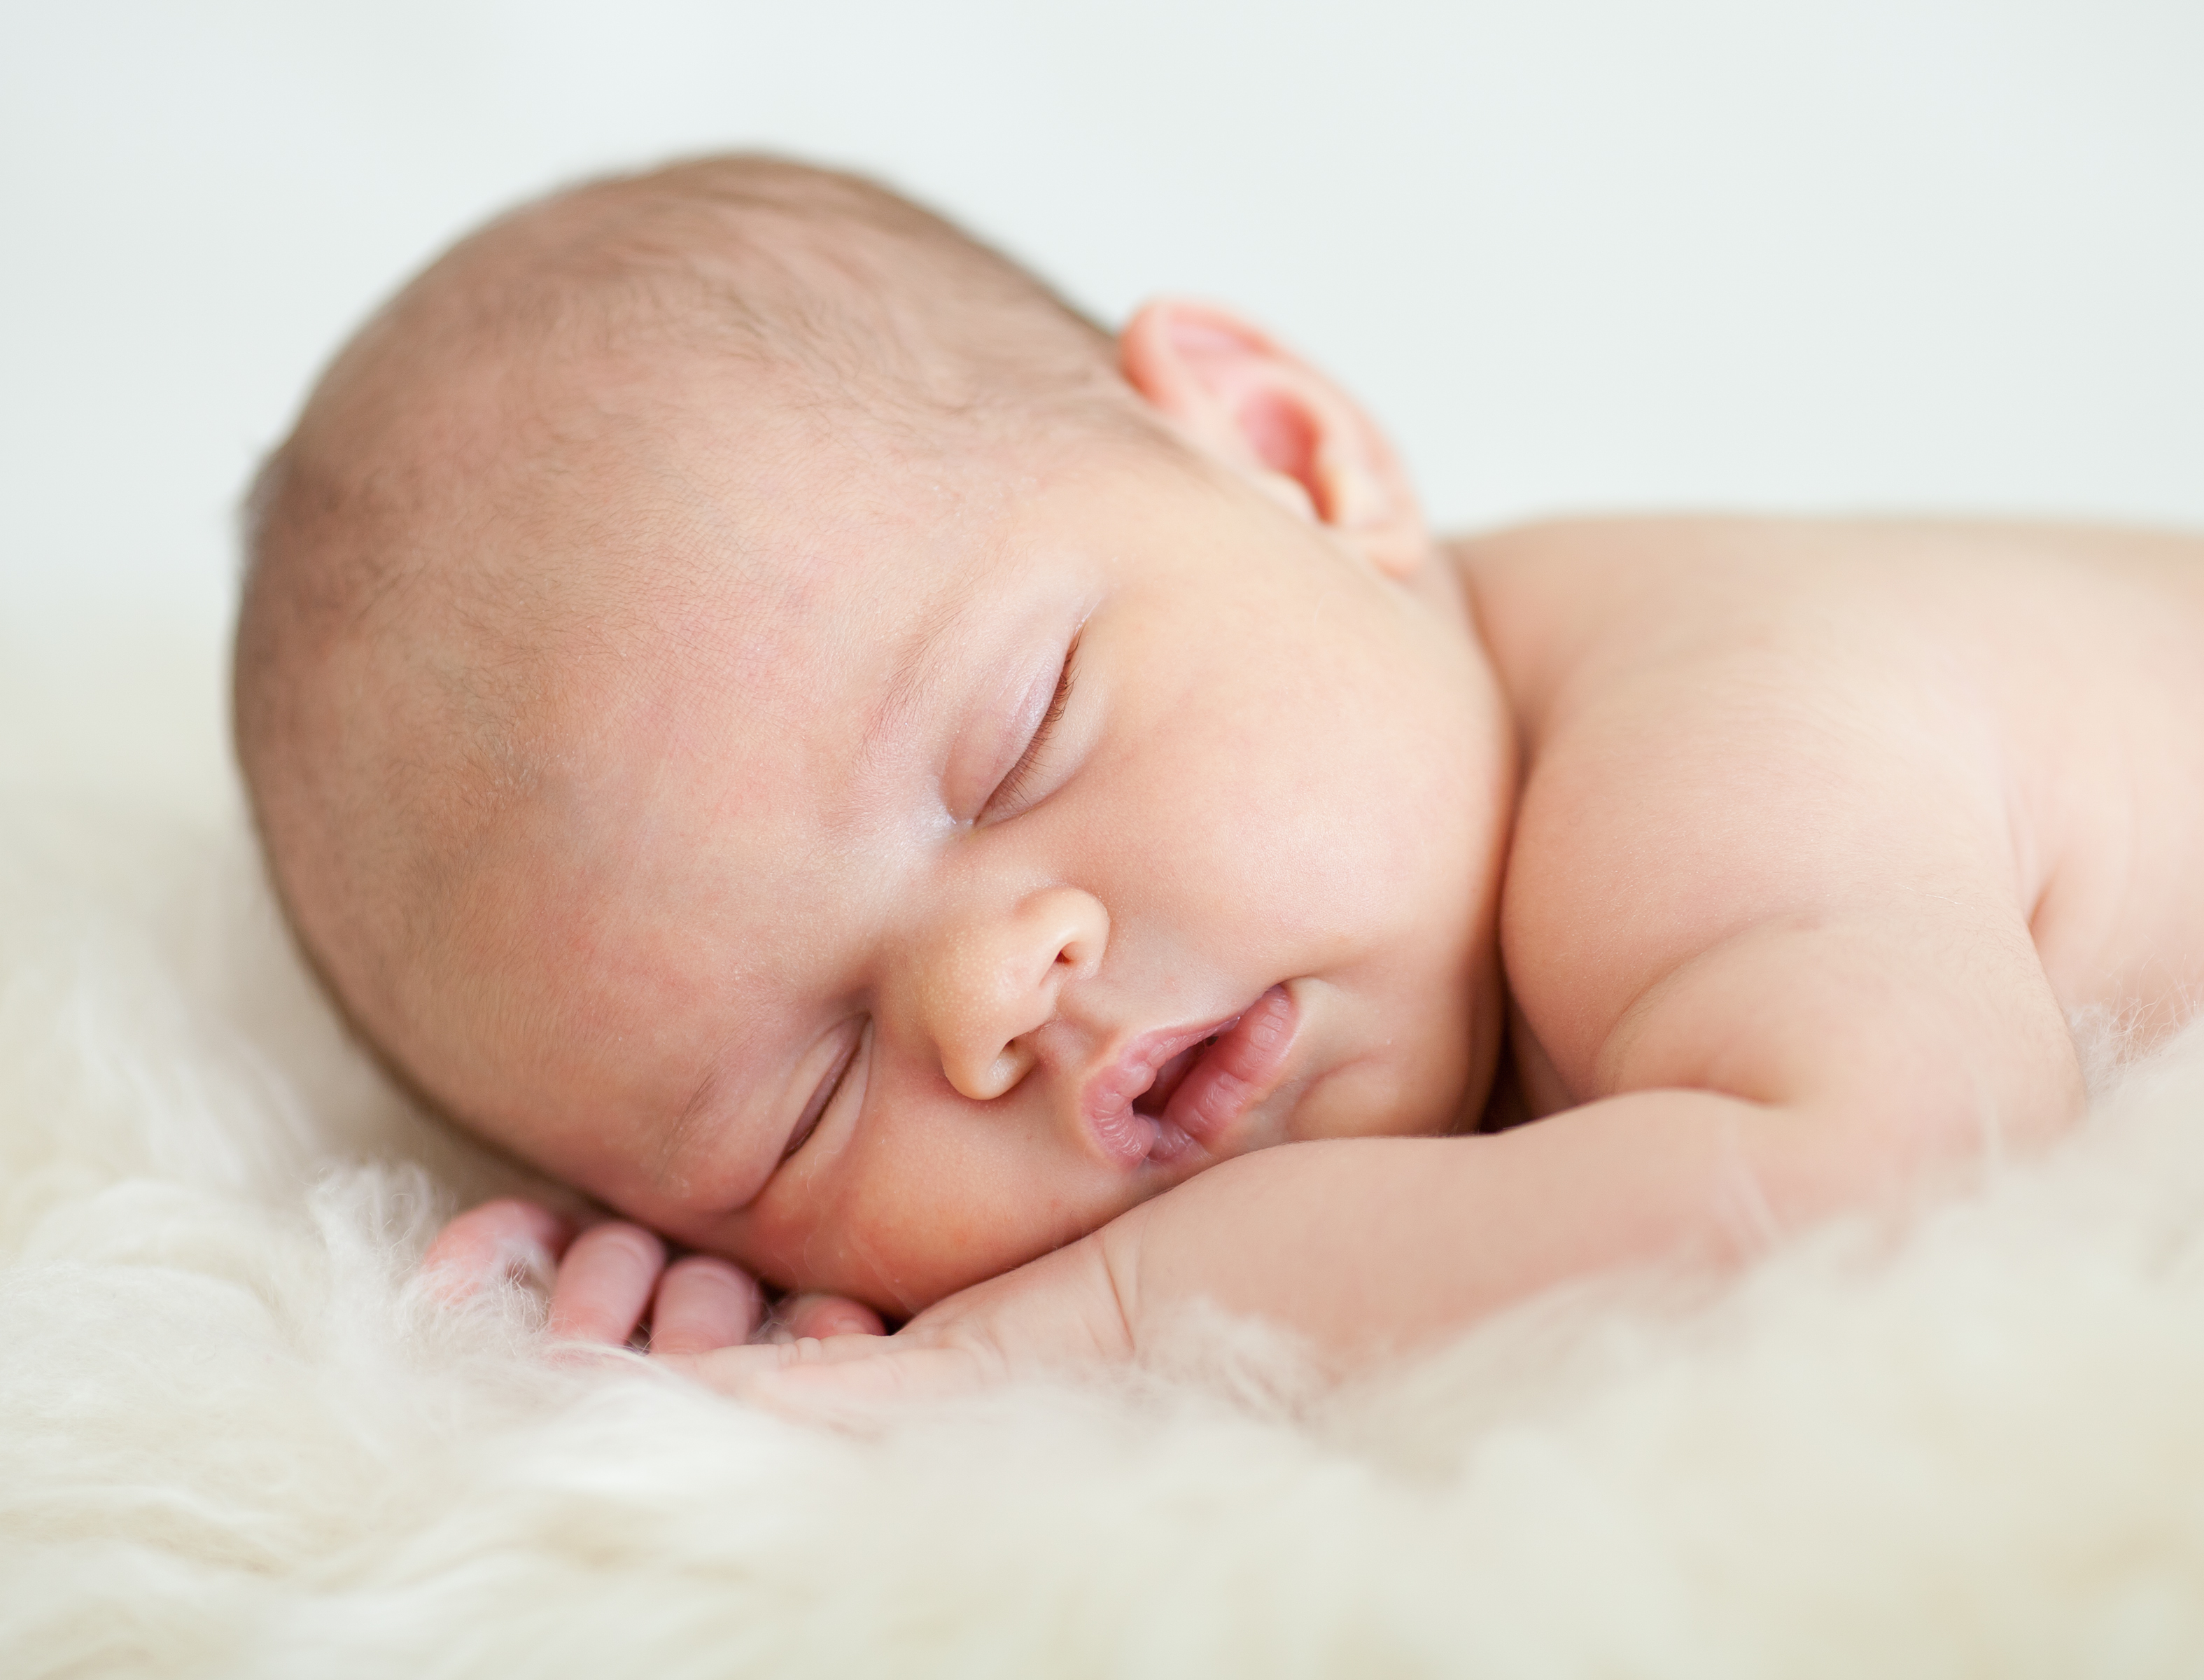 Top 11 Expert Baby Sleep Tips to Help Your Newborn Baby Sleep